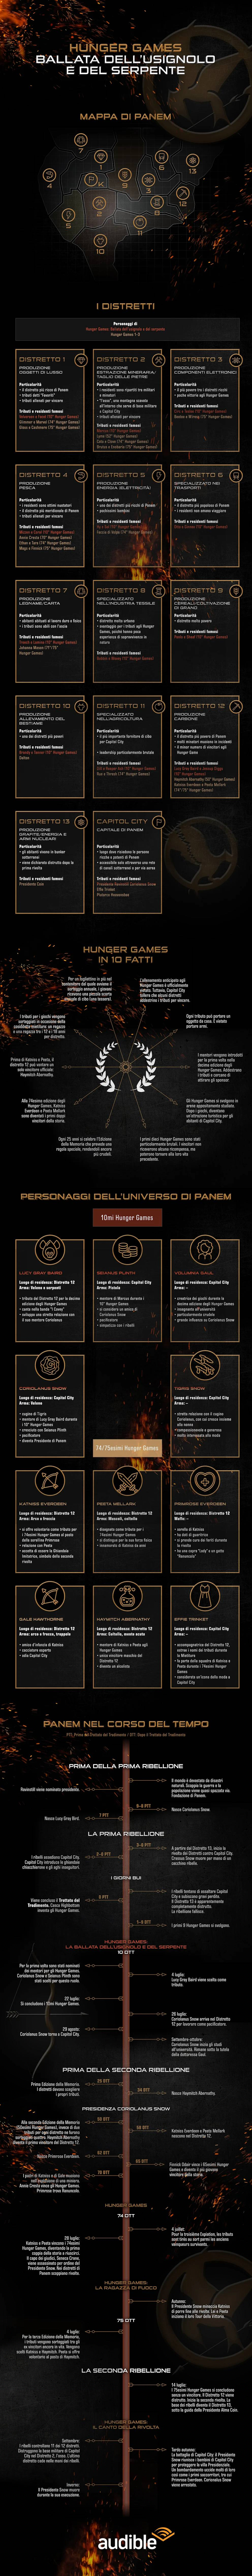 Infografica su Hunger Games